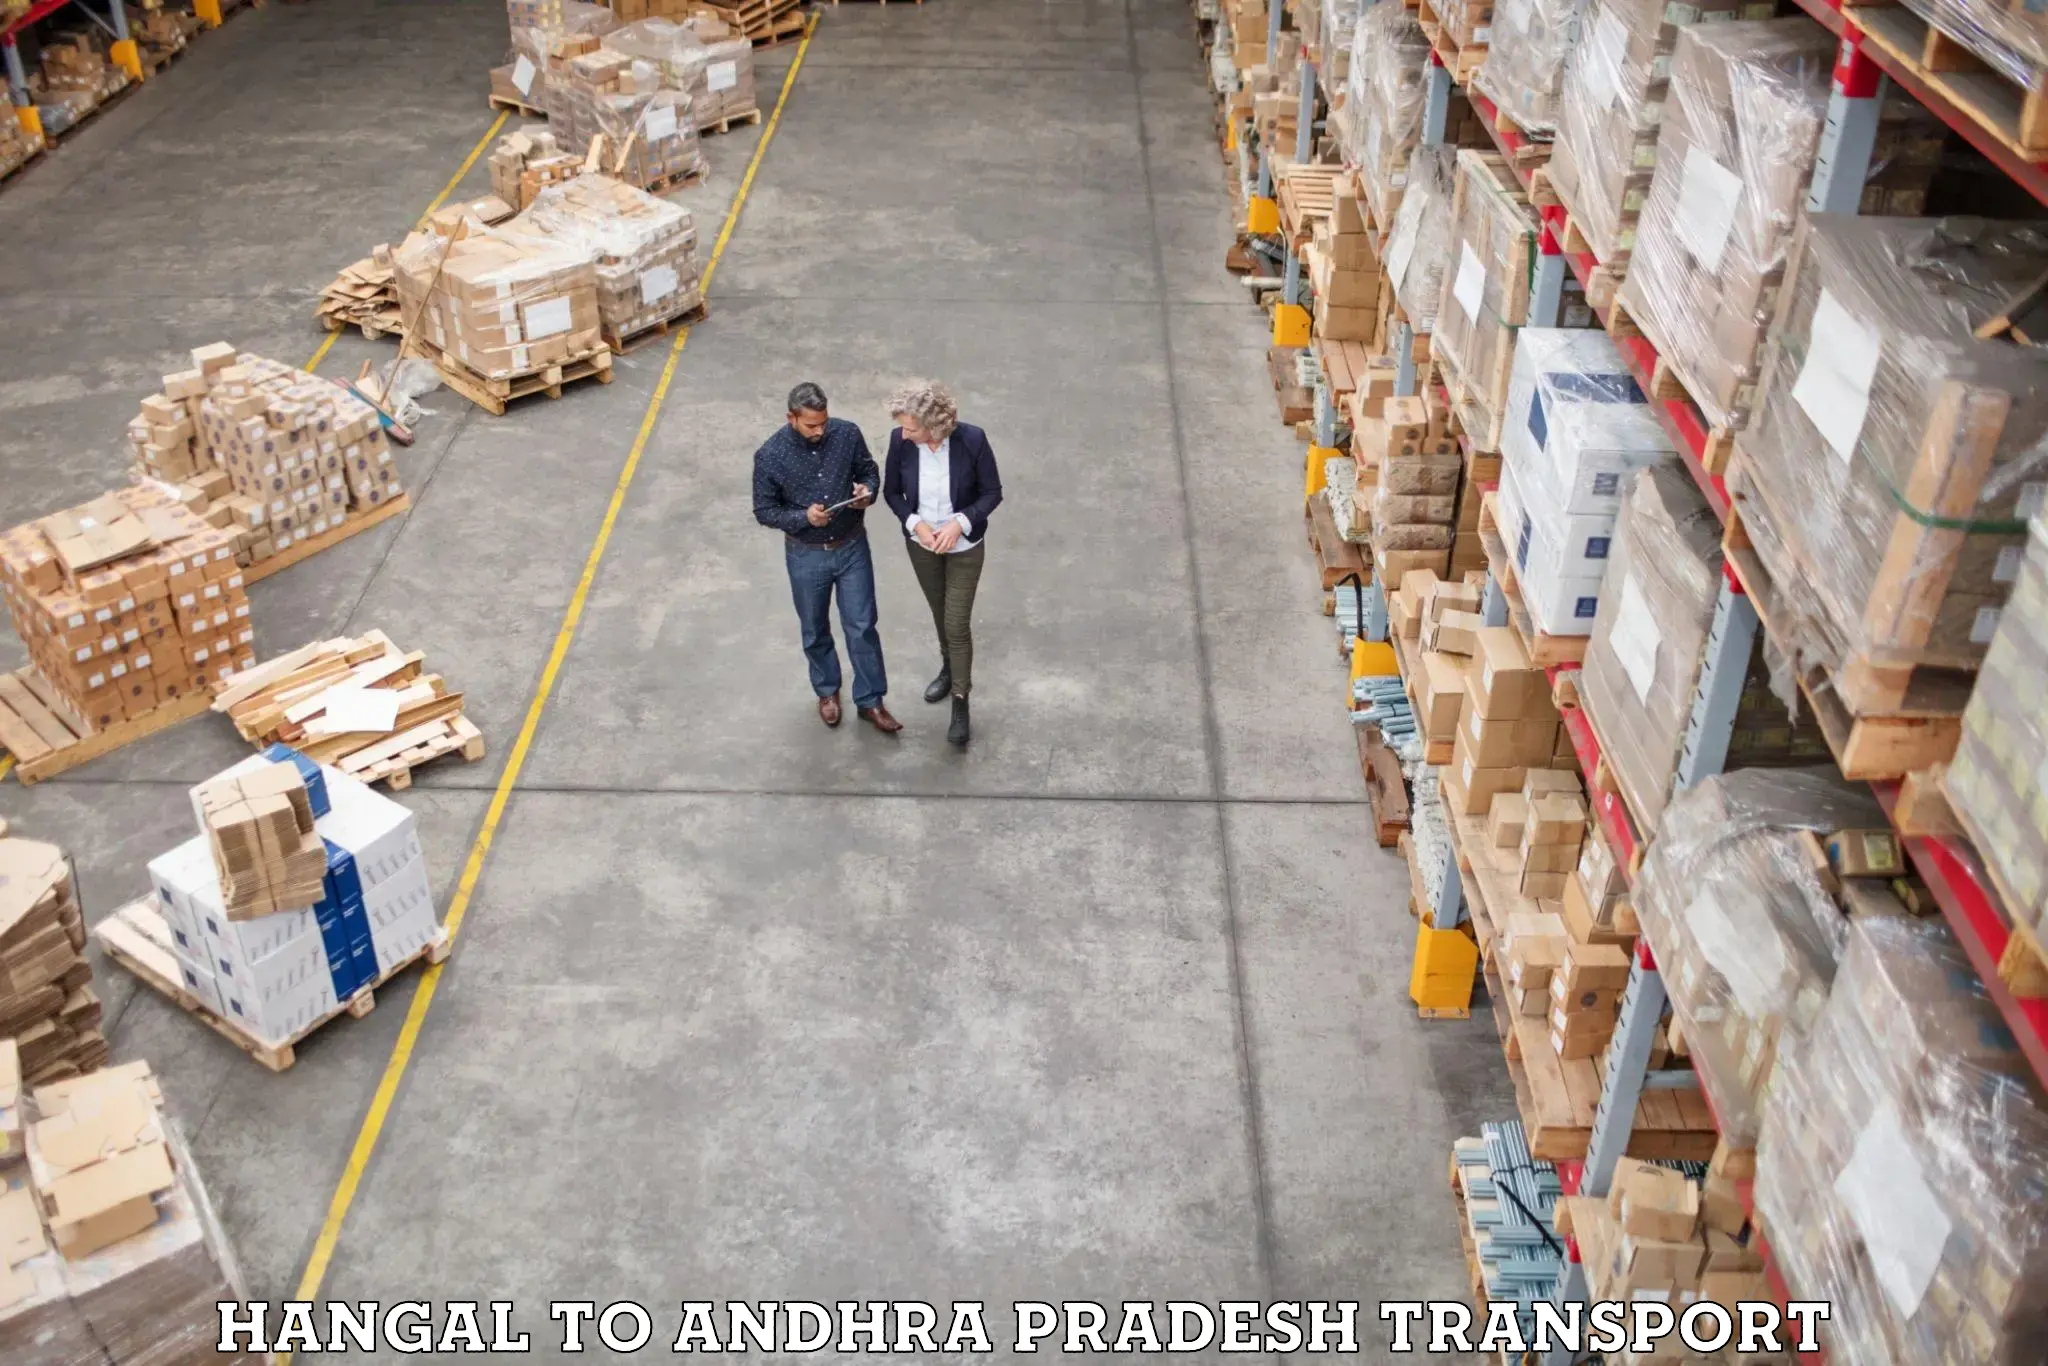 Pick up transport service in Hangal to Tirupati